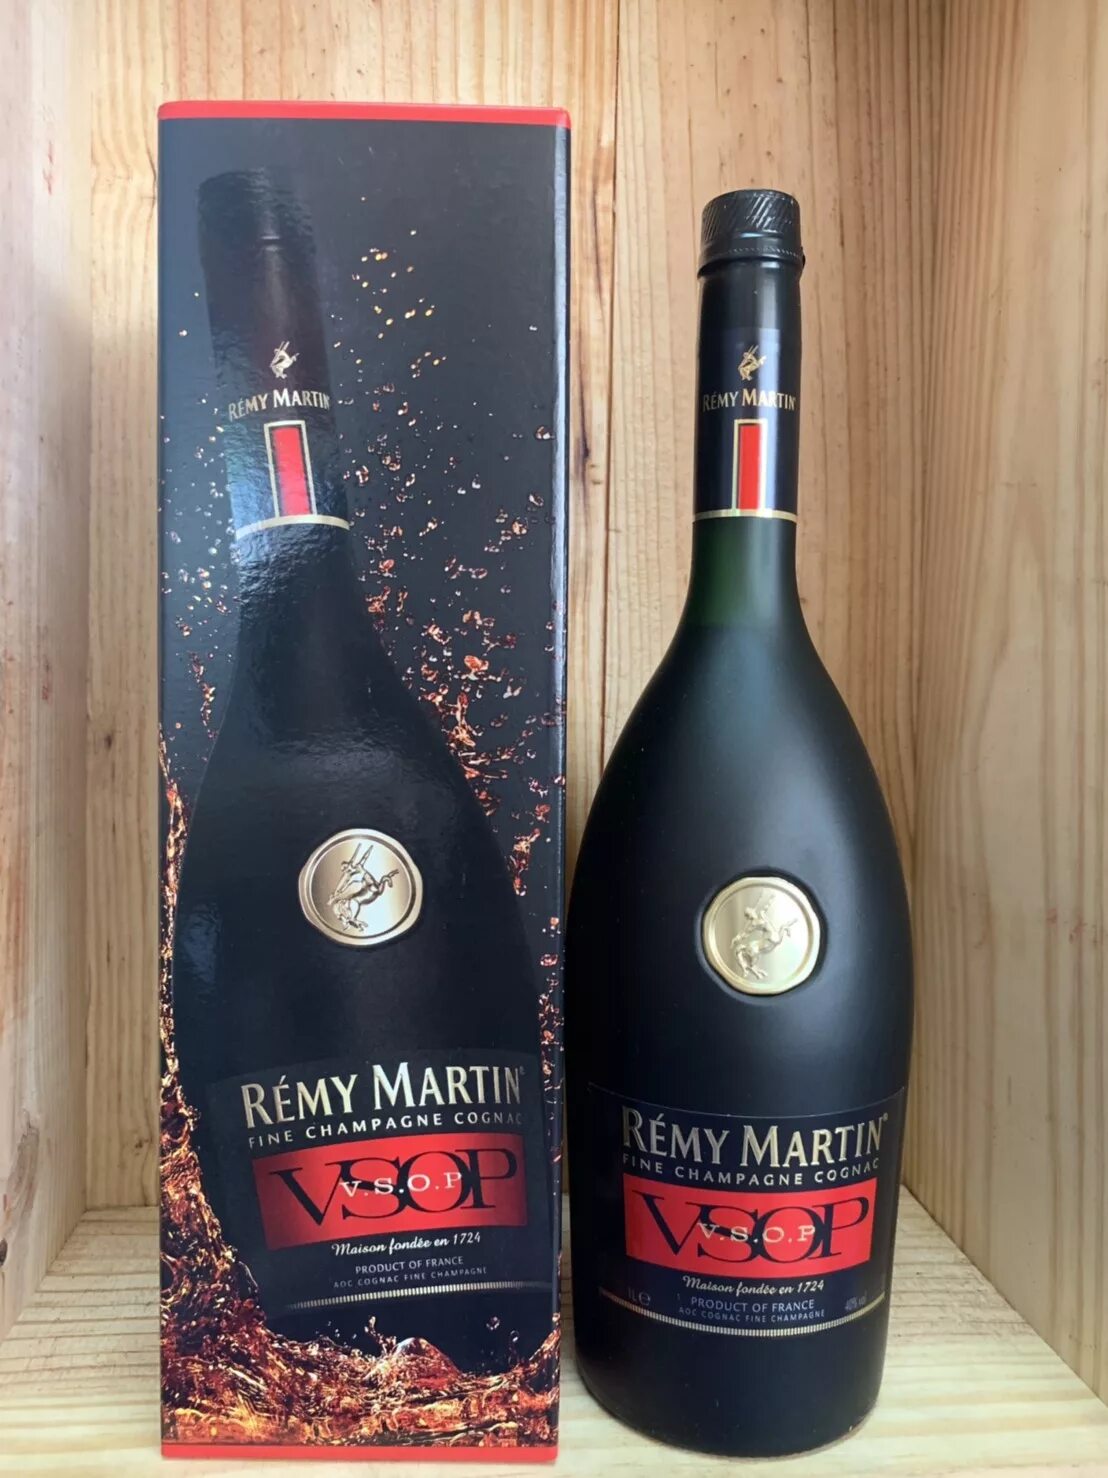 Remy martin 0.7 цена